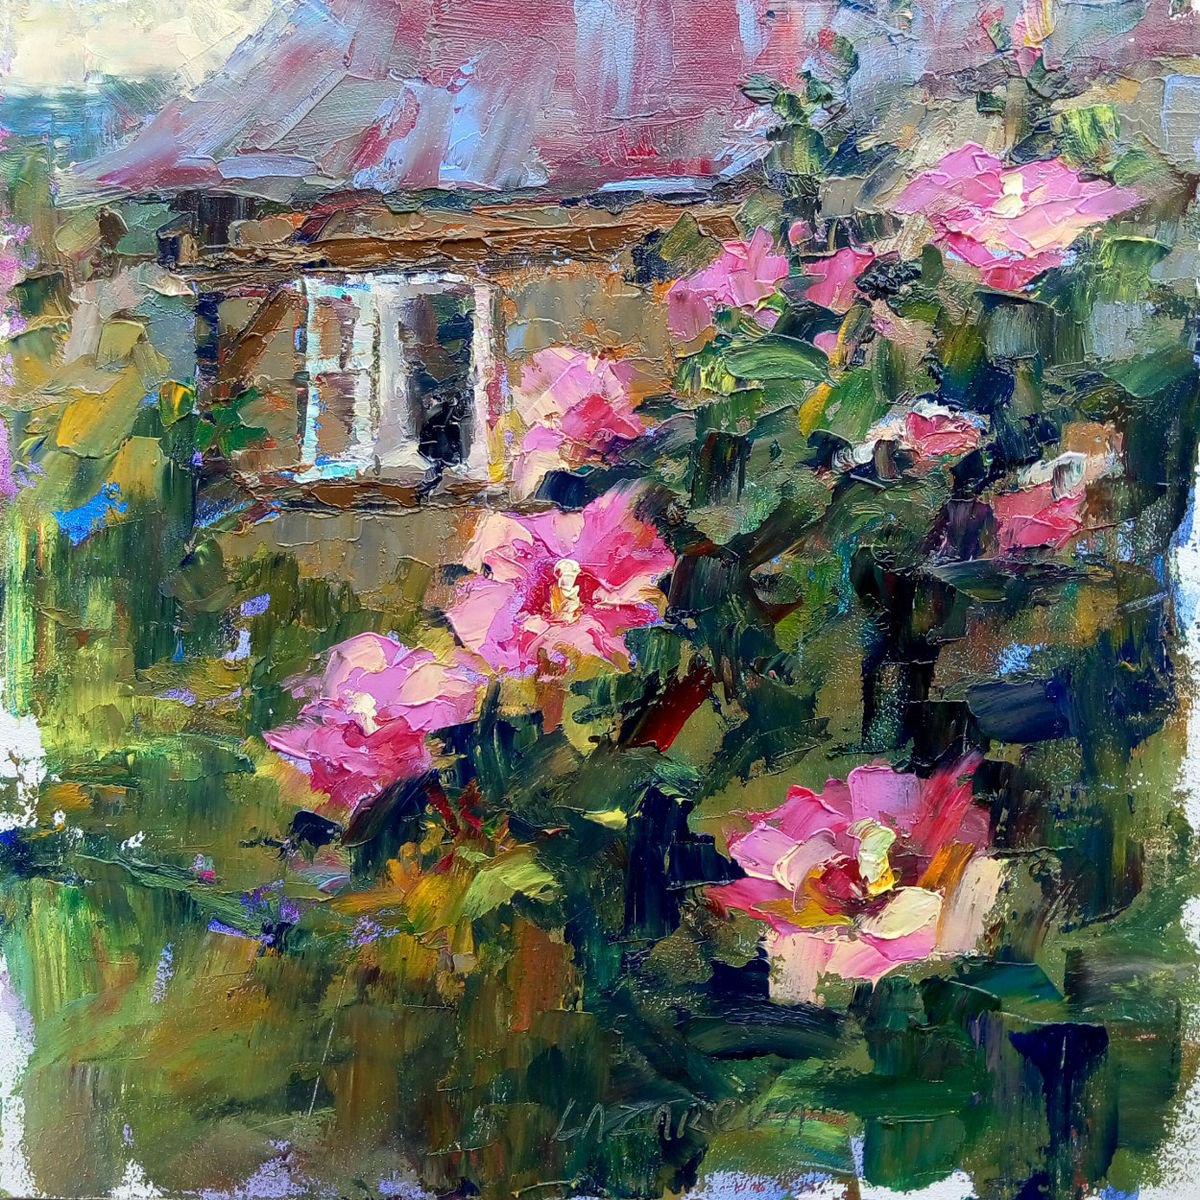 Hibiscus near the house by Valerie Lazareva